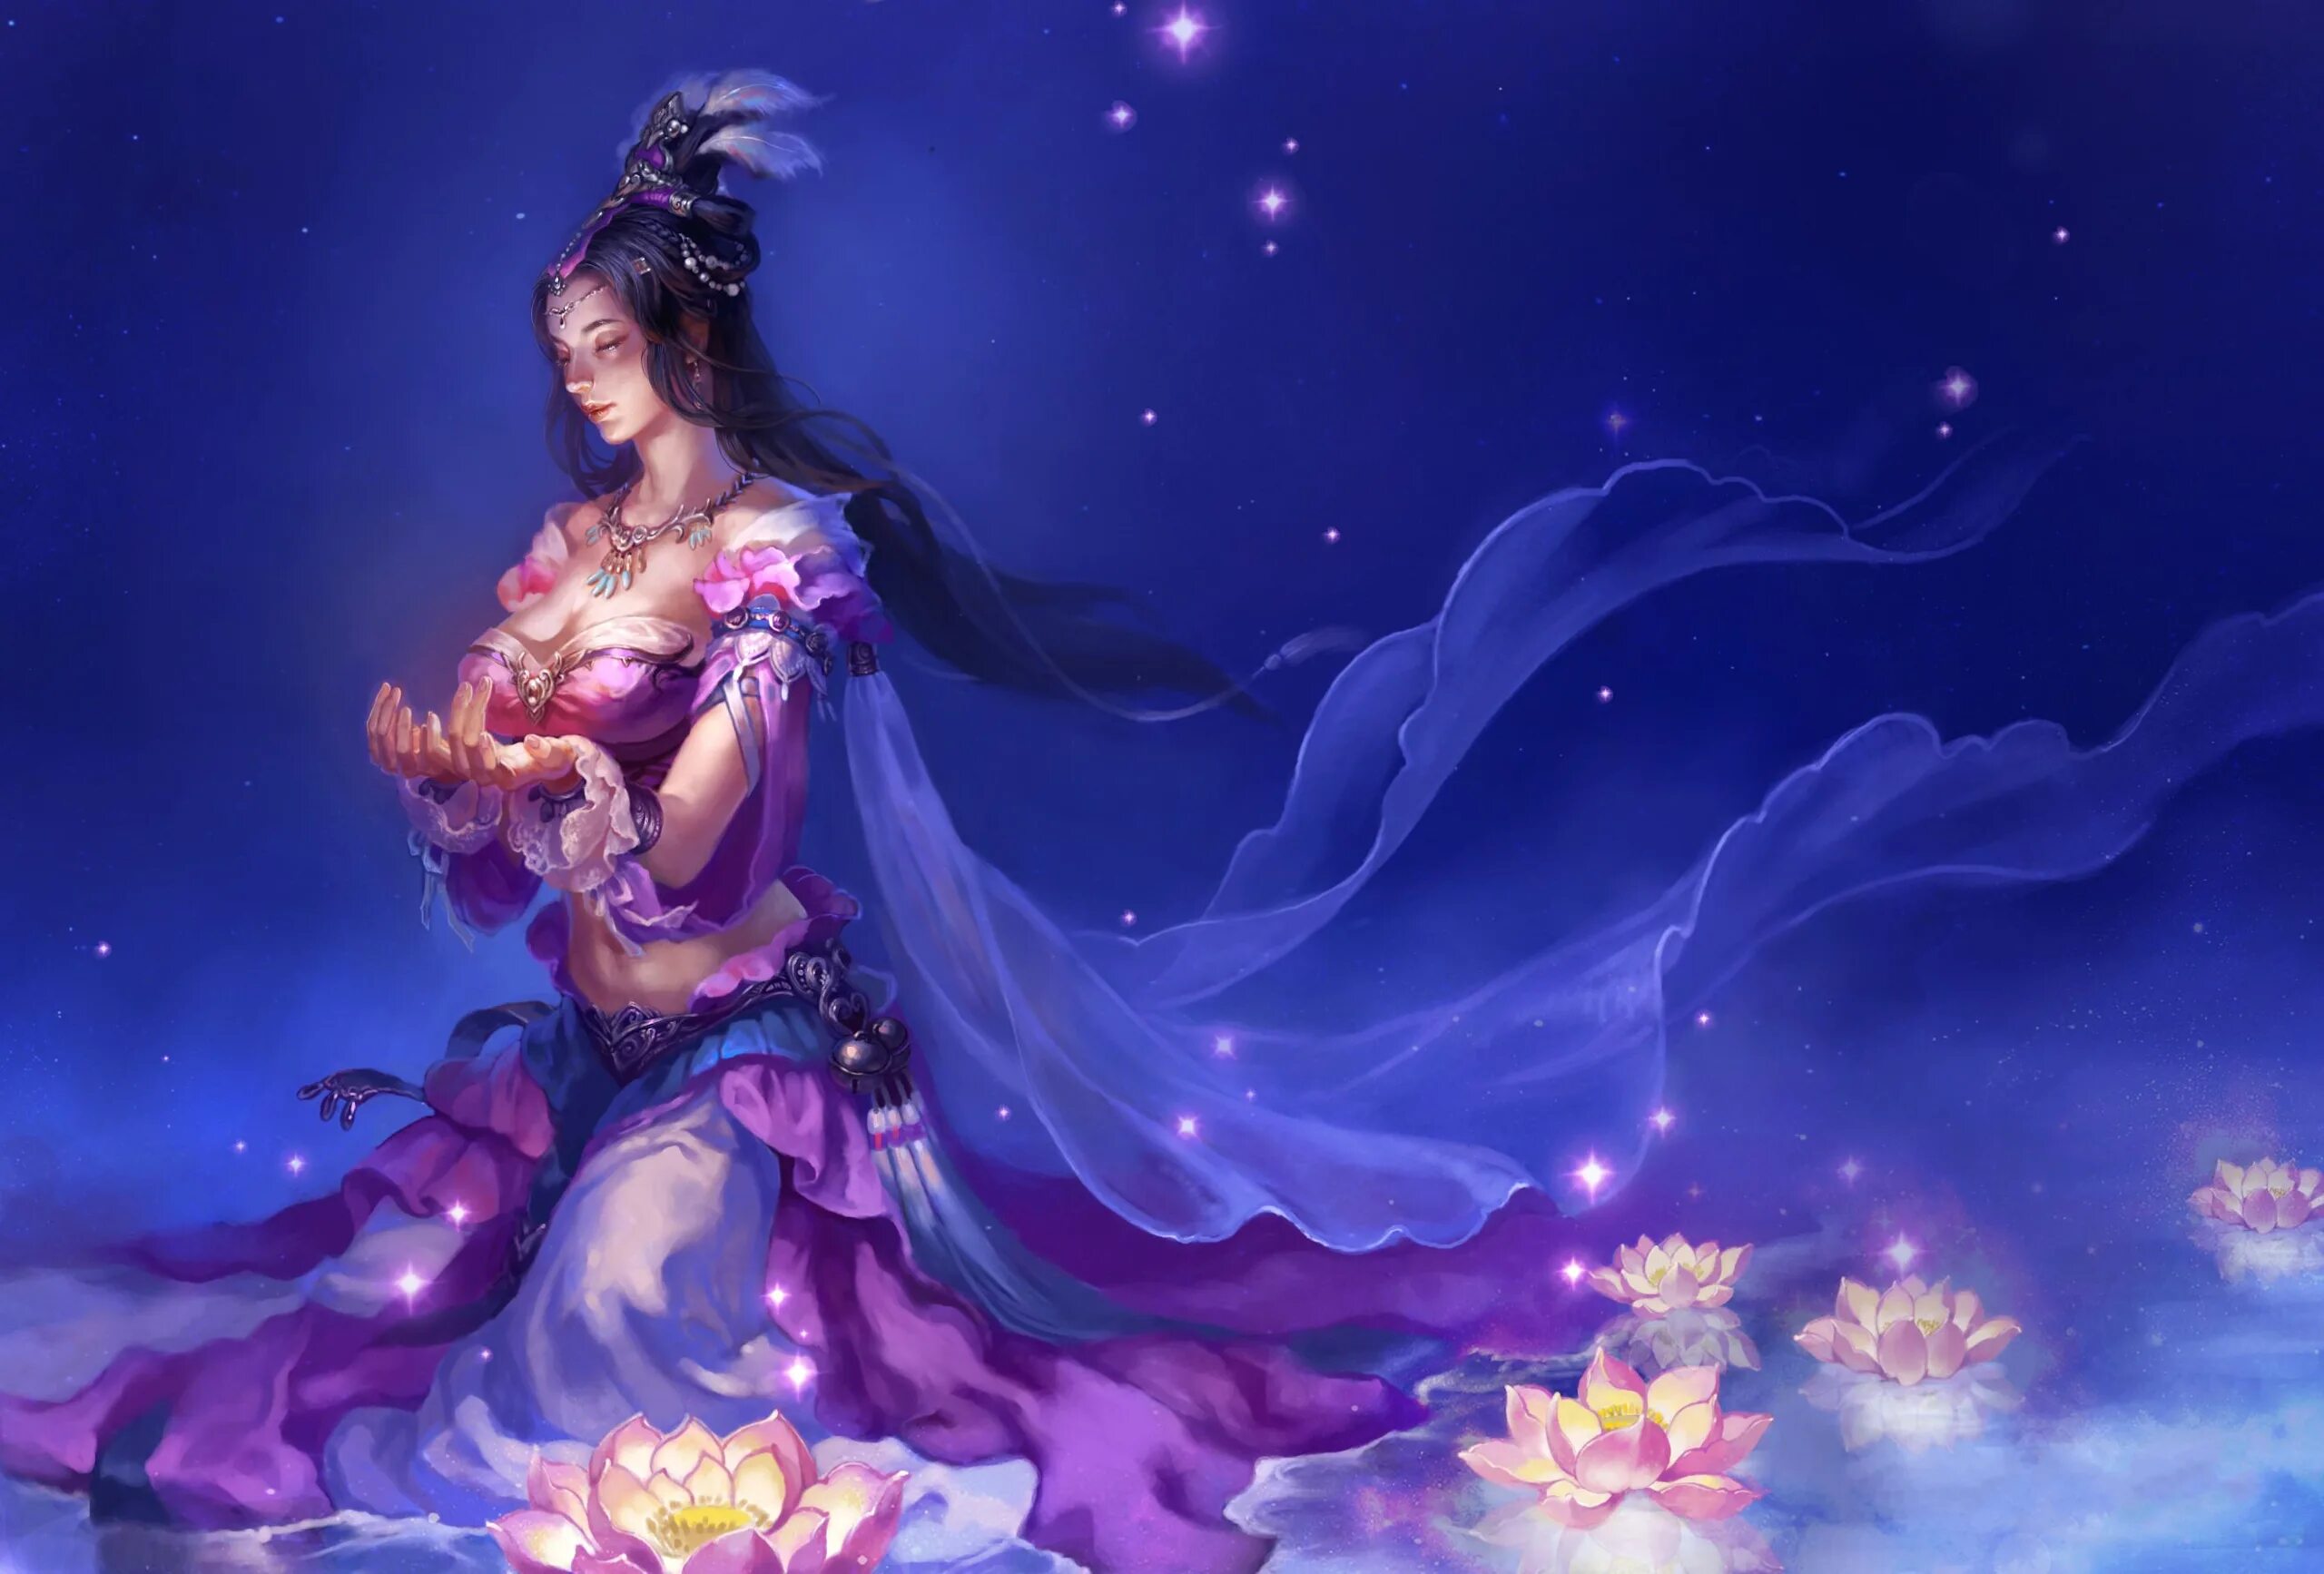 Фэнтези в теле девушки читать. Чанъэ Чан э китайская богиня. Фэнтези девушки. Восточные девушки фэнтези. Восточная принцесса фэнтези.